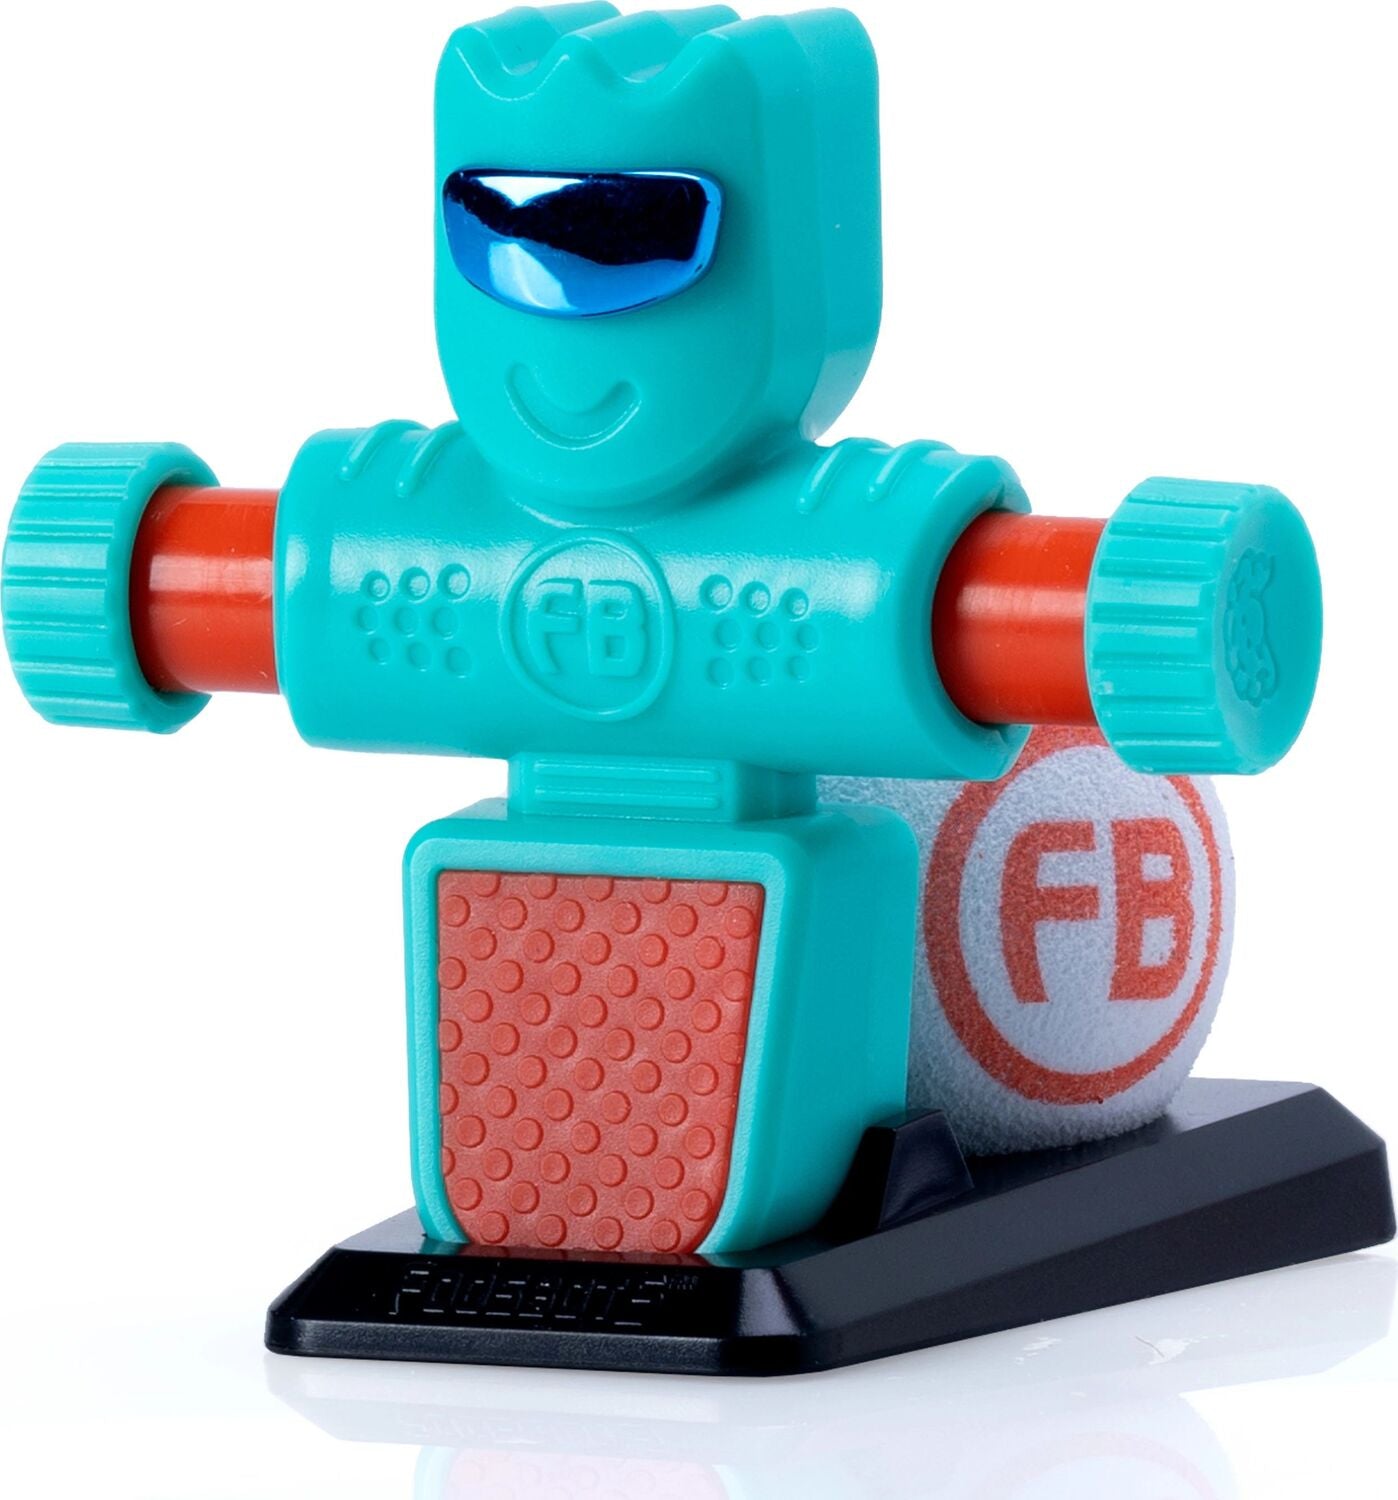 Foosbot Single Series 2 (assorted colors)